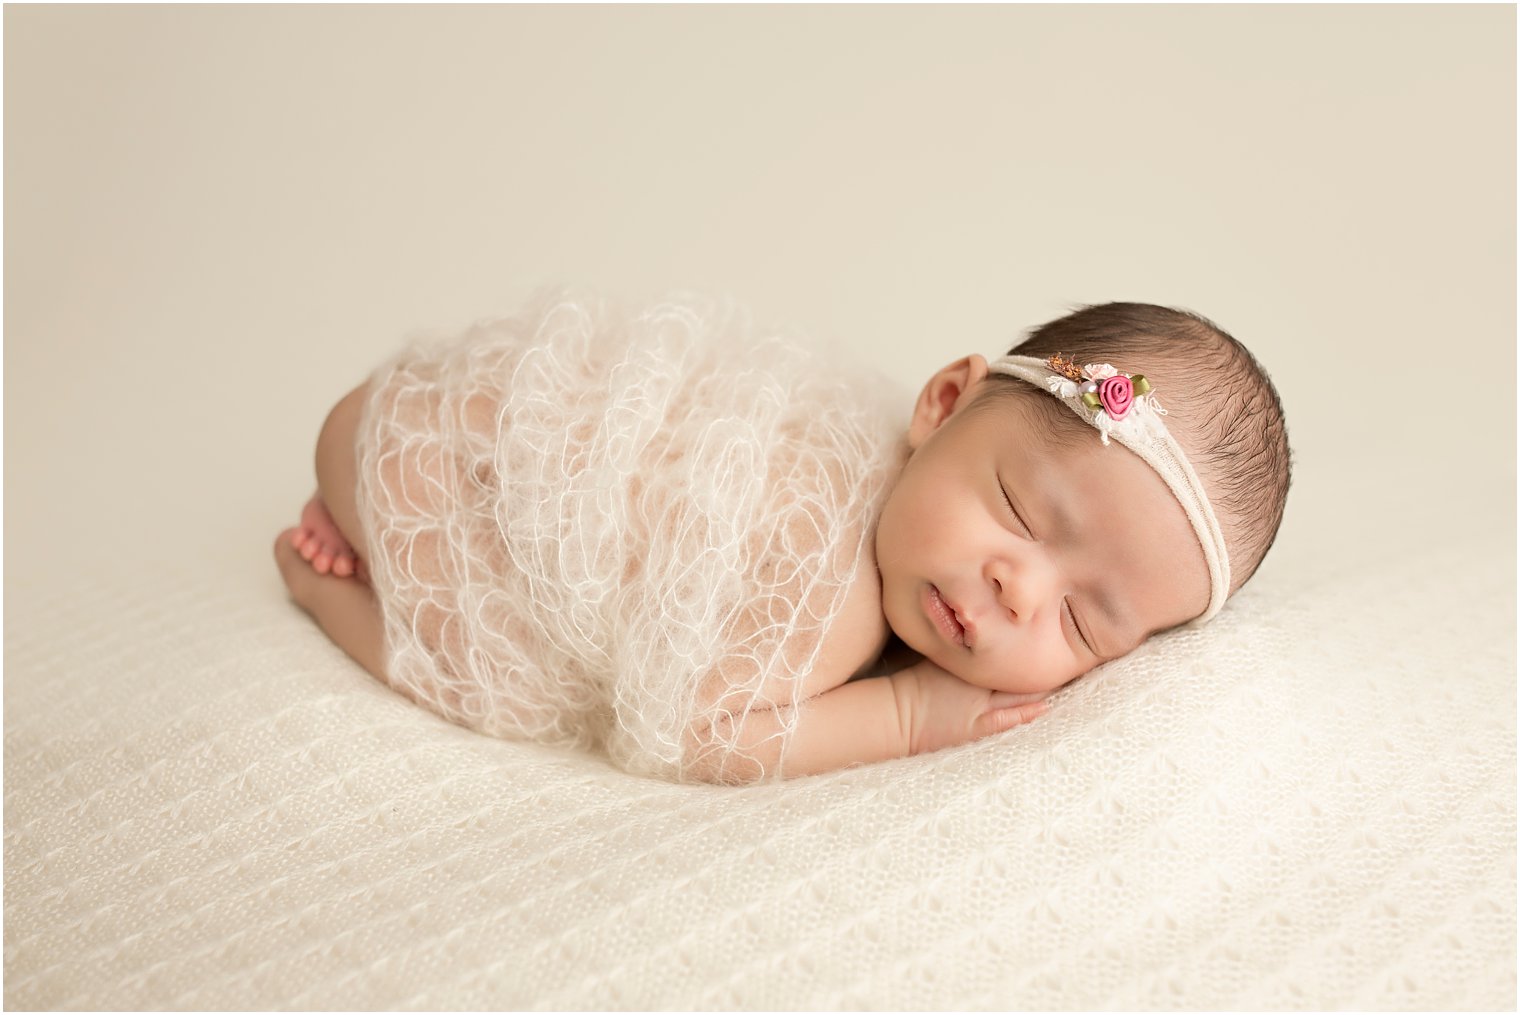 Sleepy newborn girl | Photo by Idalia Photography